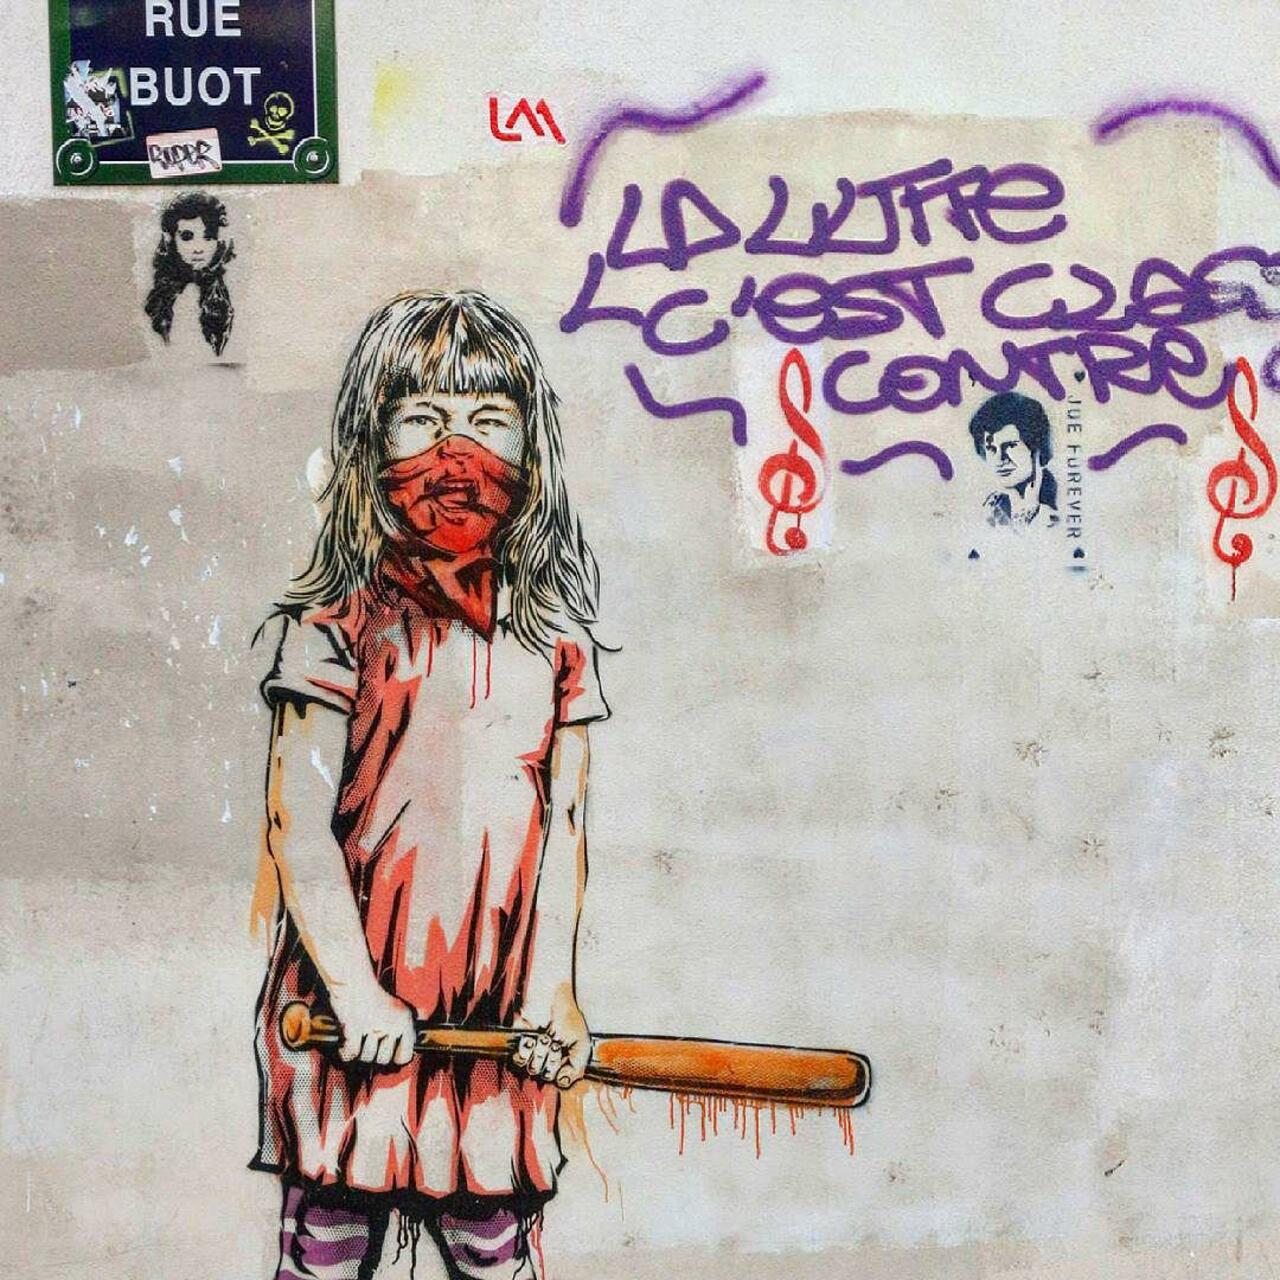 #Paris #graffiti photo by @jpoesse http://ift.tt/1LRt4yg #StreetArt http://t.co/A32LjmGulF